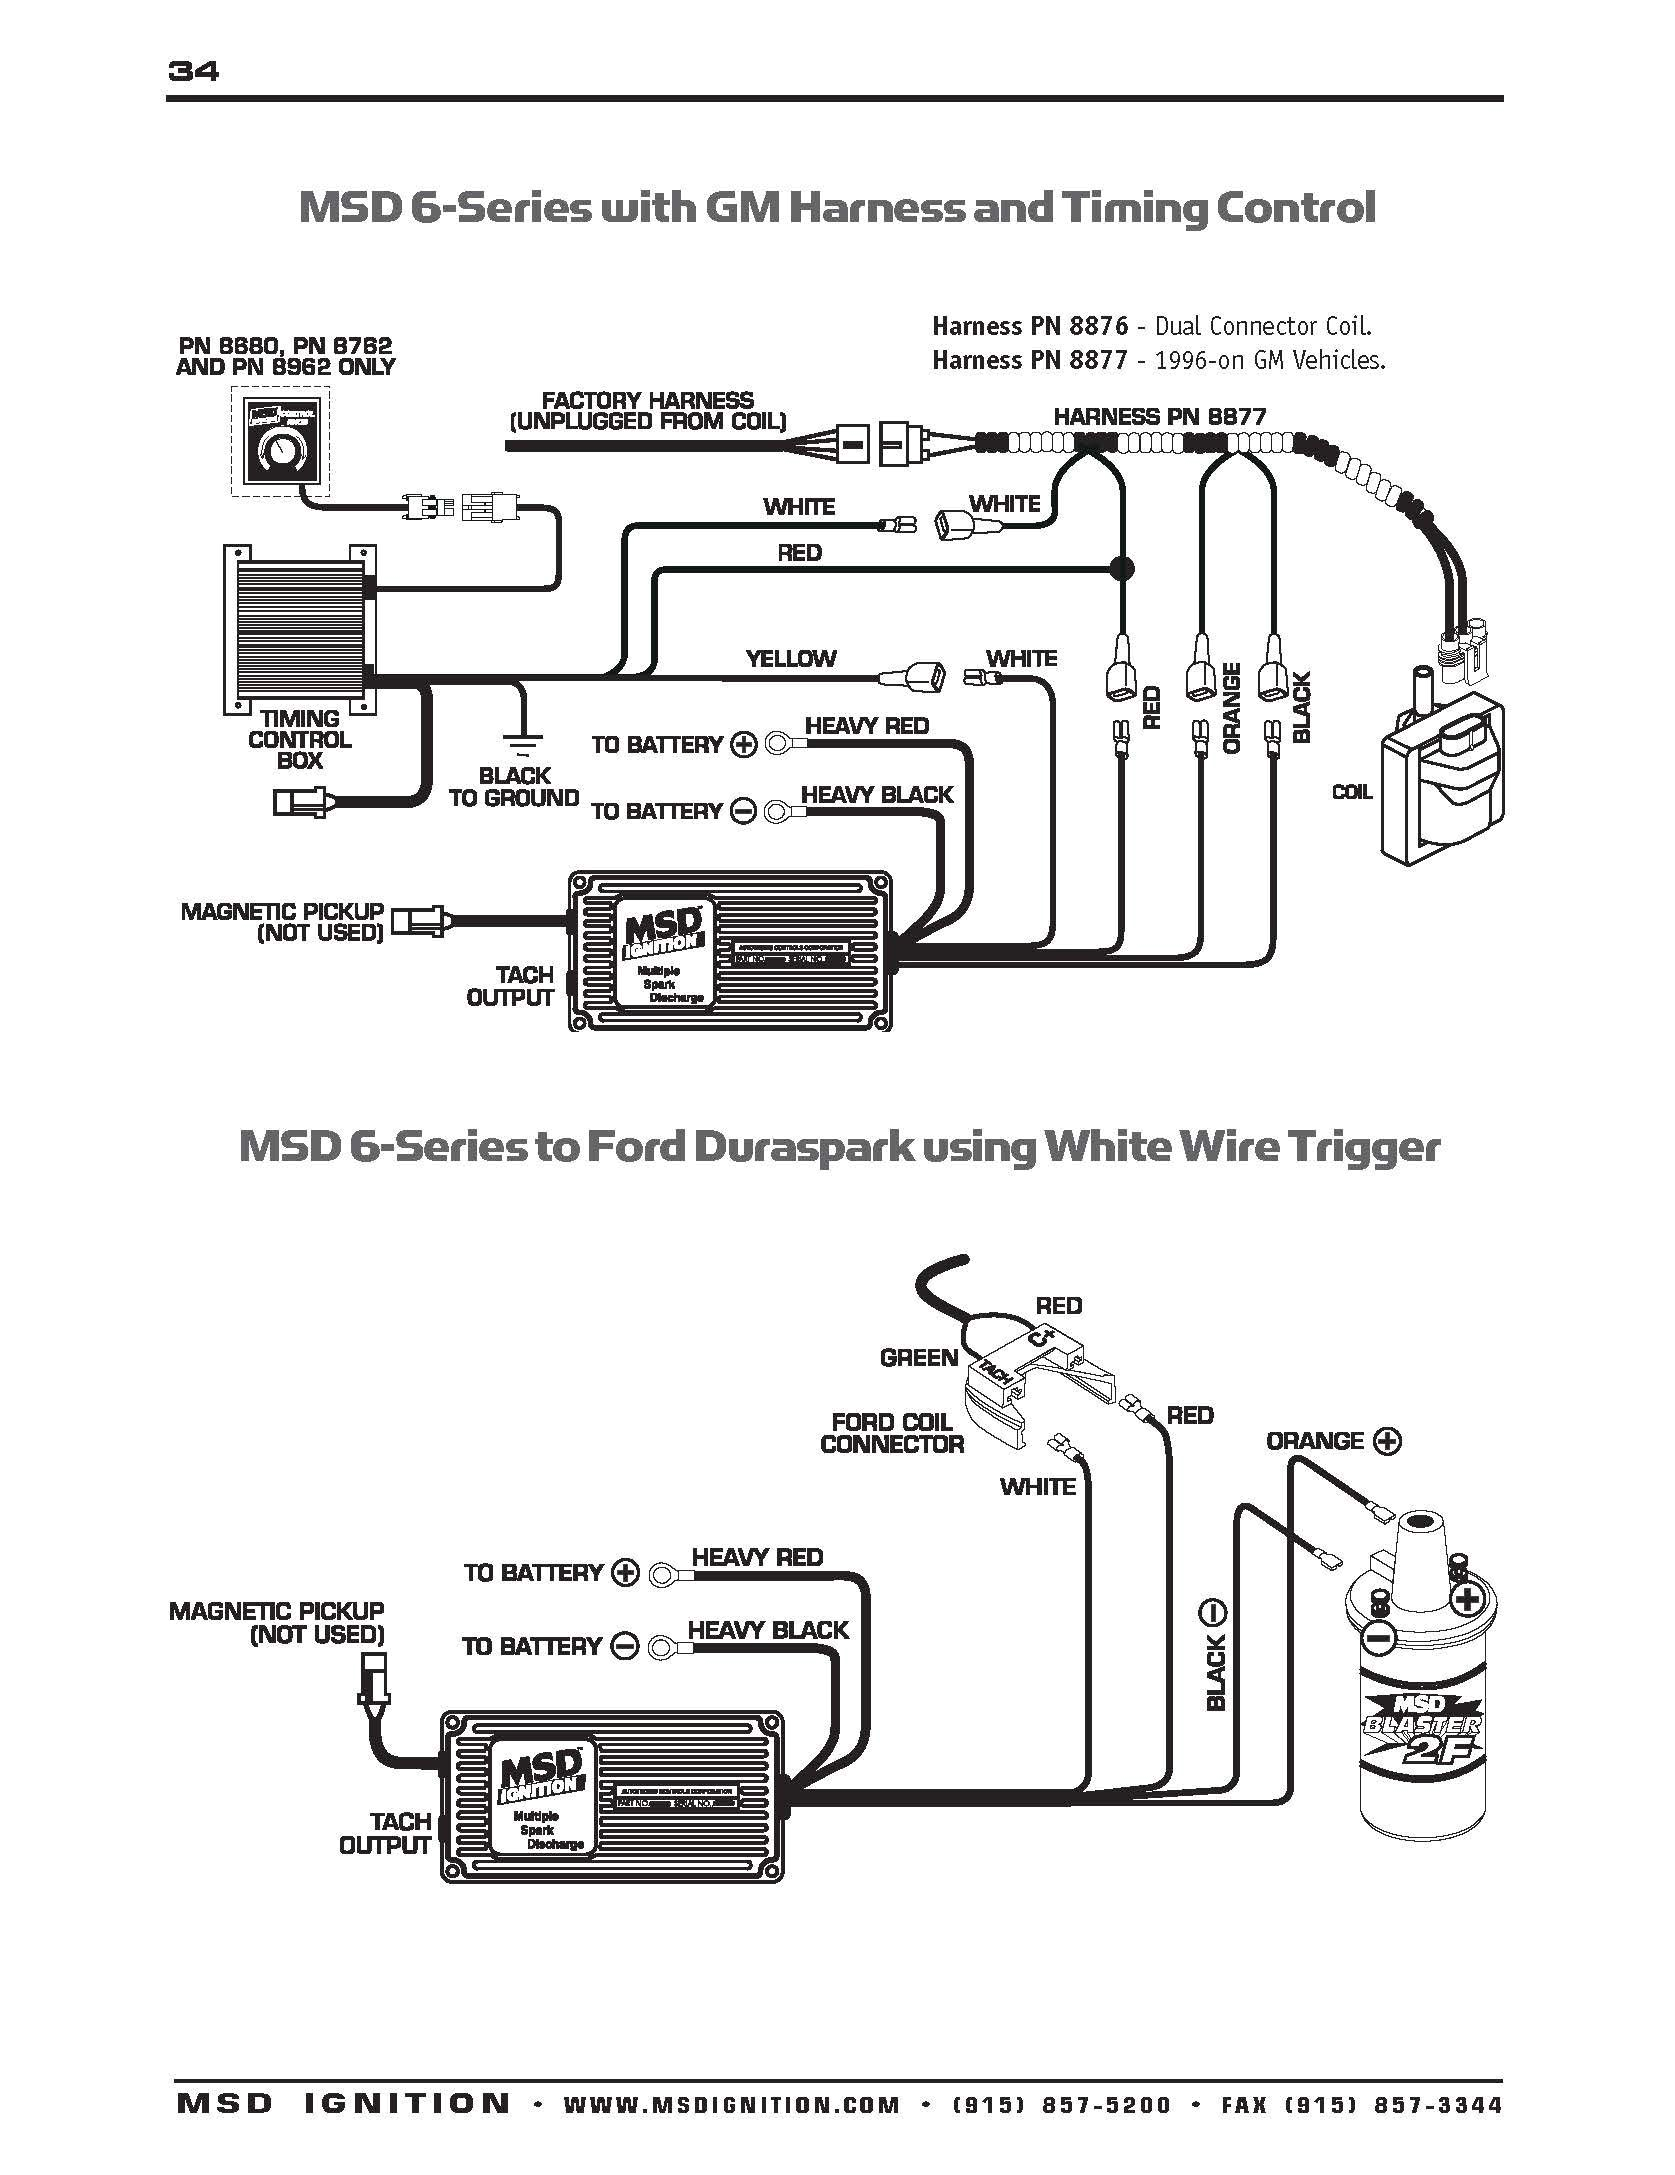 460 ford distributor cap wiring diagram wiring diagram review ford 460 distributor wiring